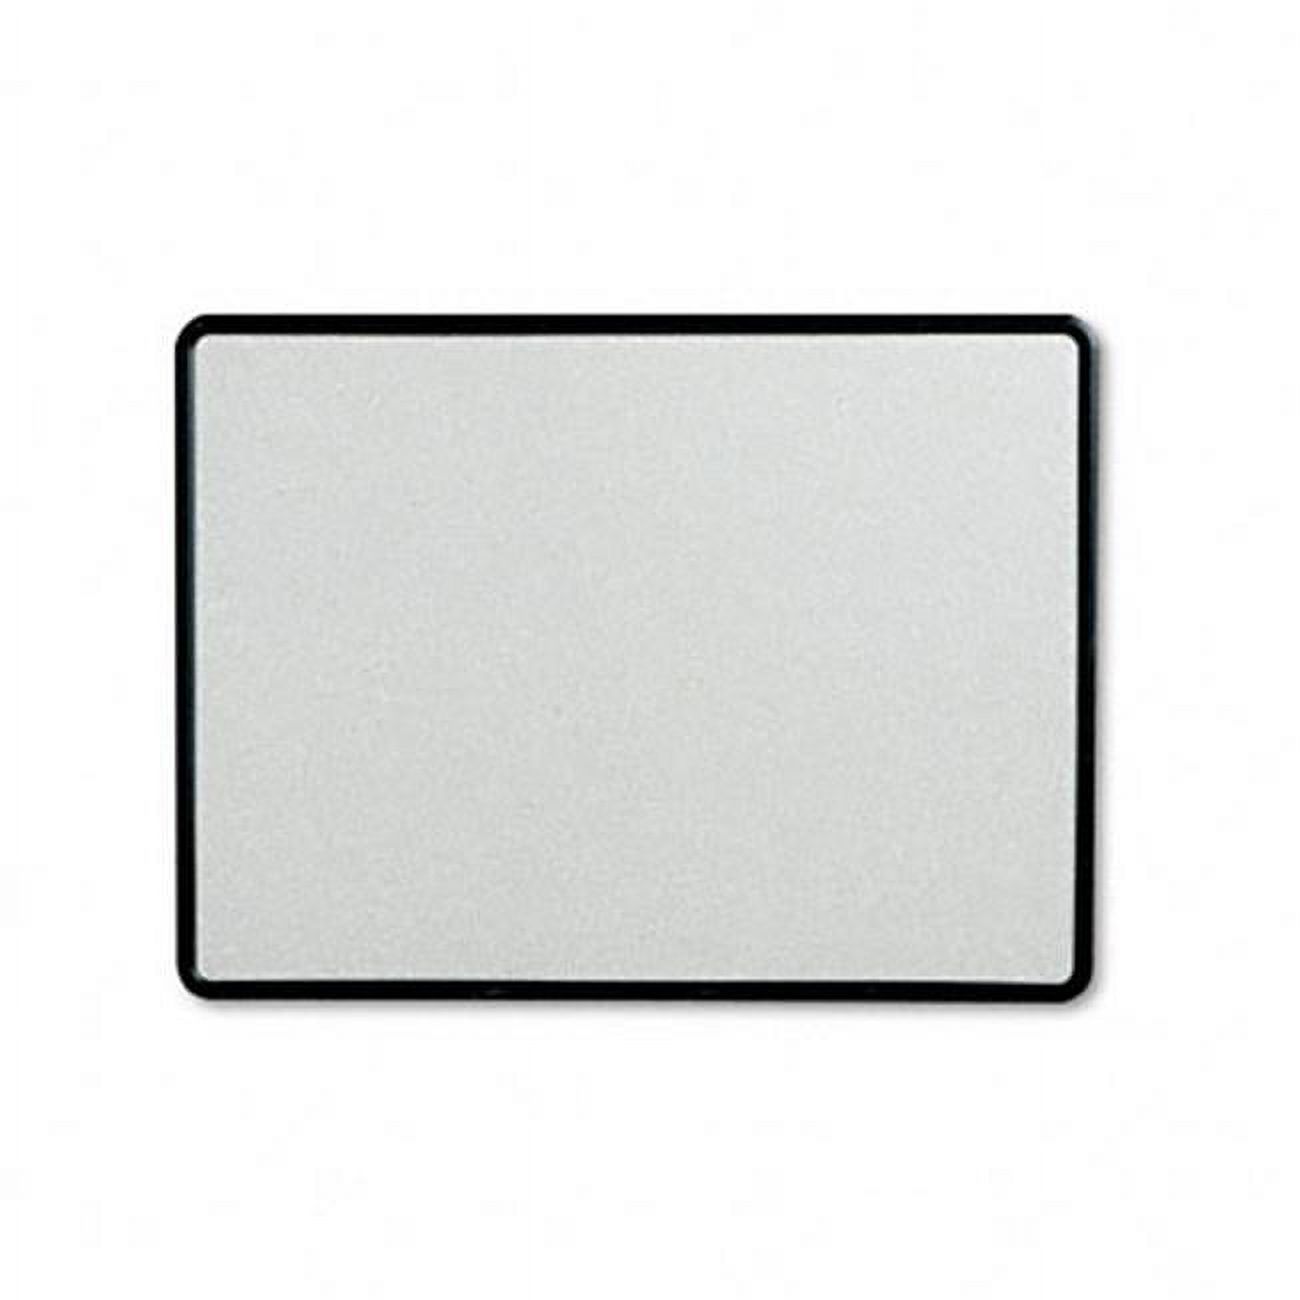 Contour Granite-Finish Tack Board  48 x 36  Black Frame - image 1 of 1